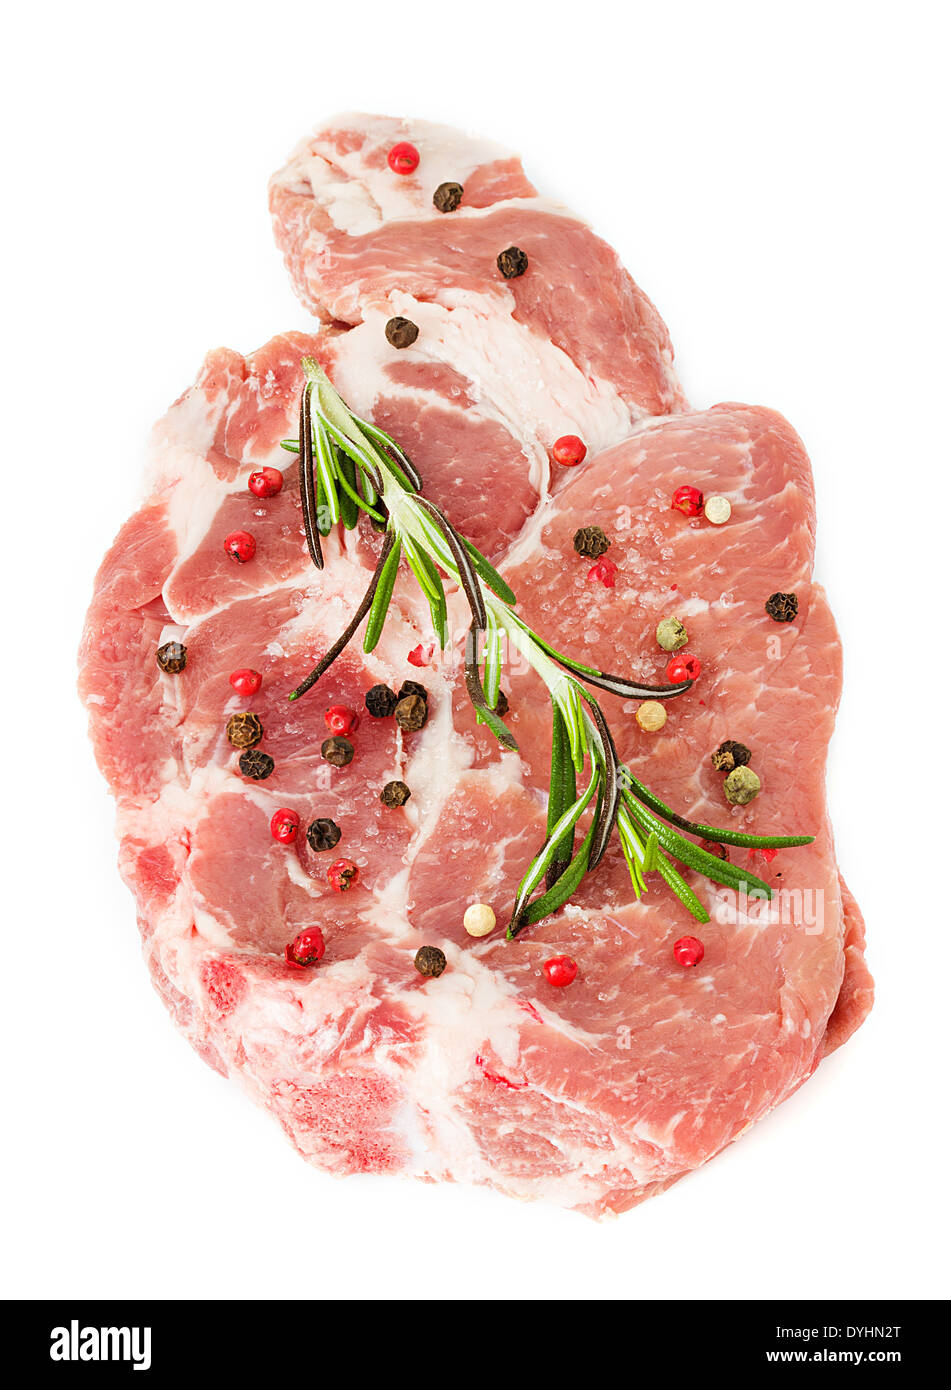 crude meat, steak close-up isolated on white background Stock Photo